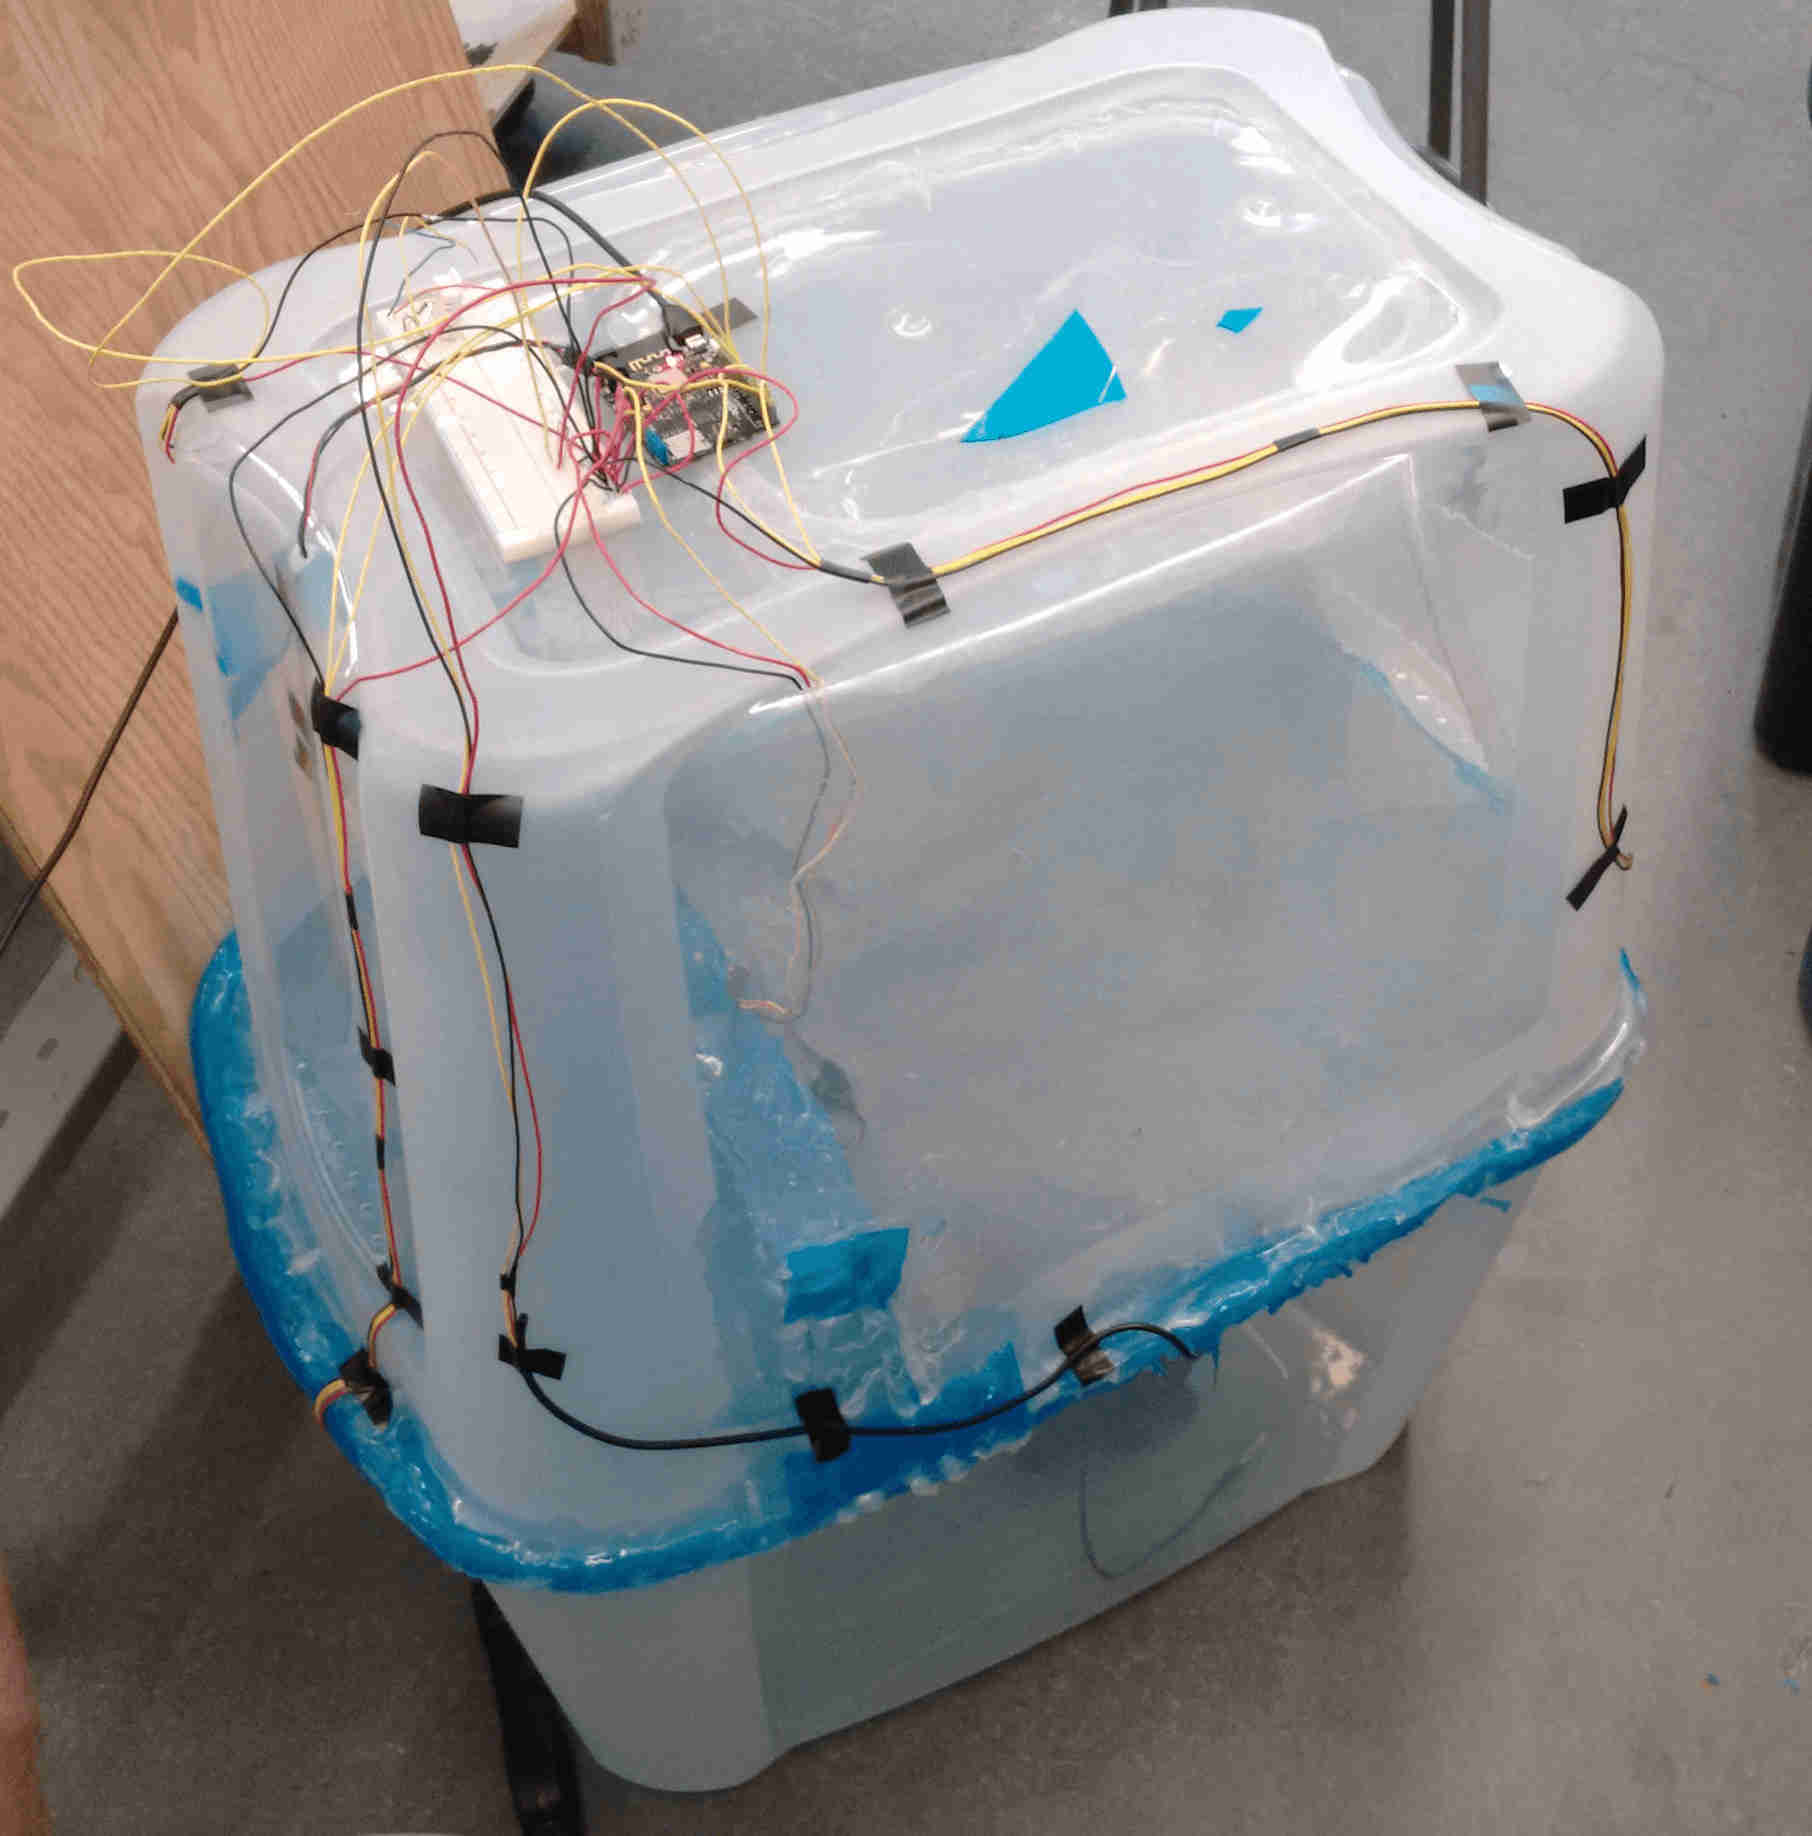 Fig 2: Sensor wiring of Mars hydroponic system